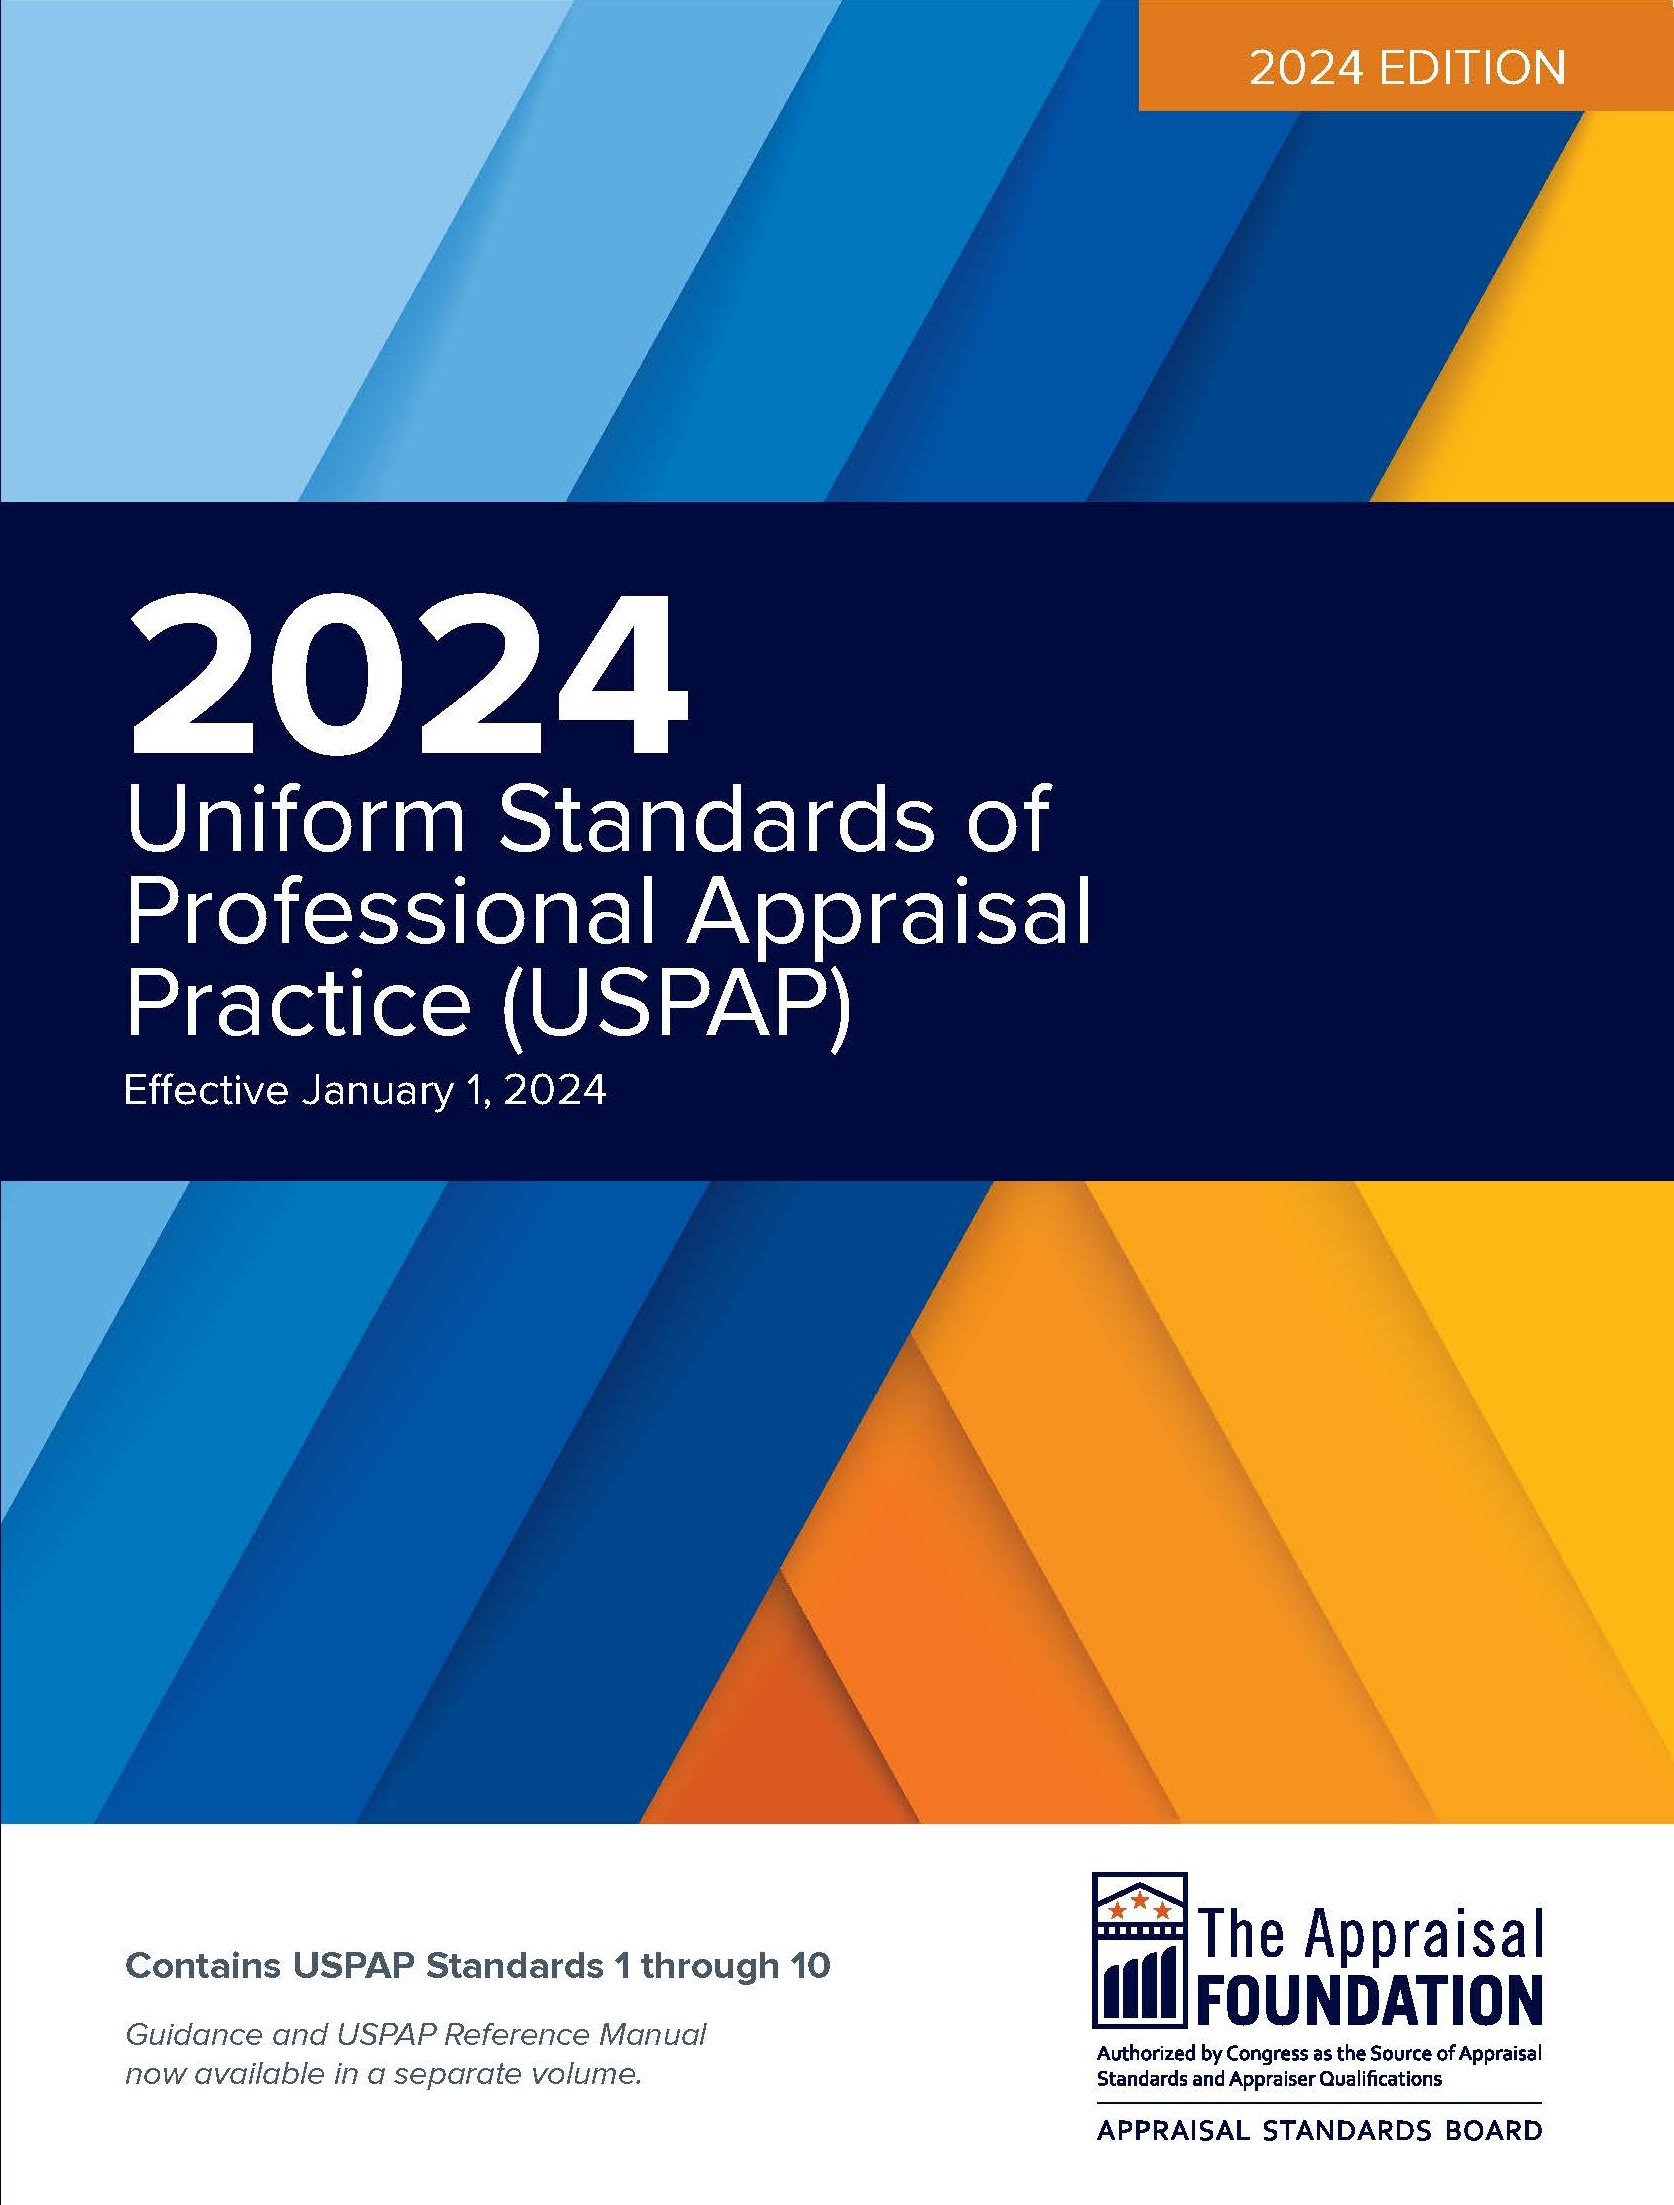 Uniform Standards of Professional Appraisal Practice (USPAP)